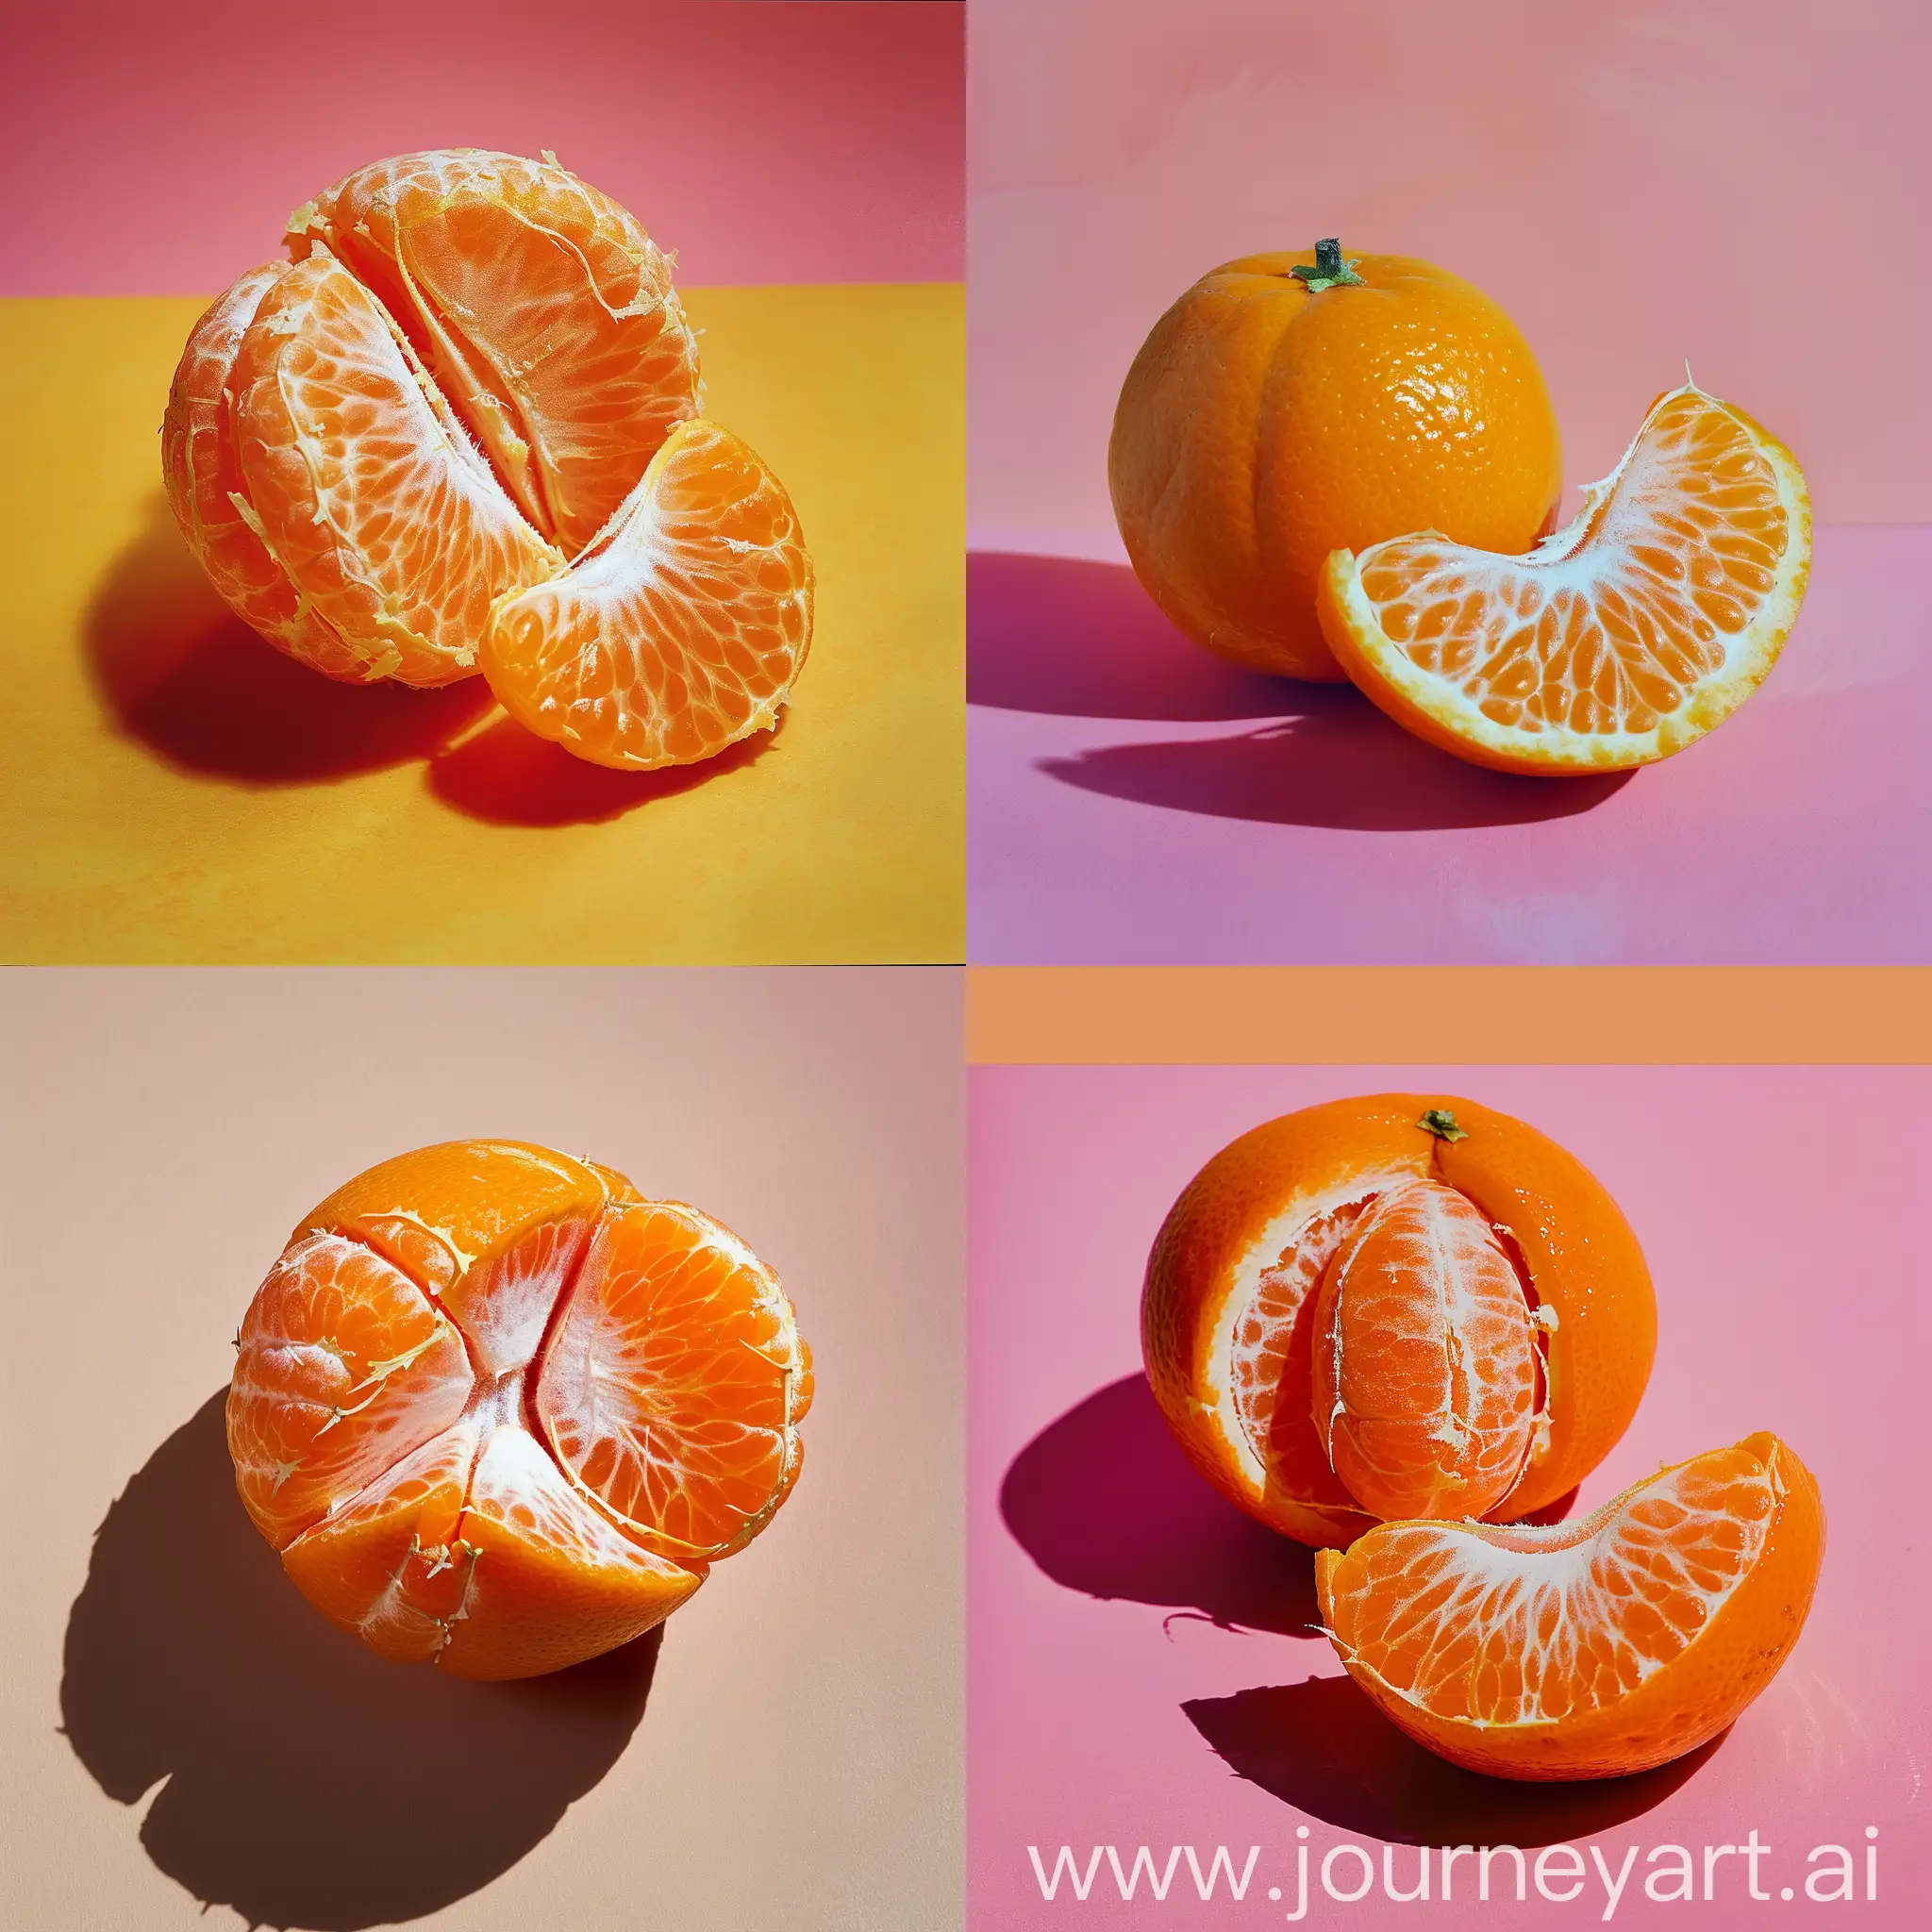 Vibrant-Tangerine-in-Promotional-Photo